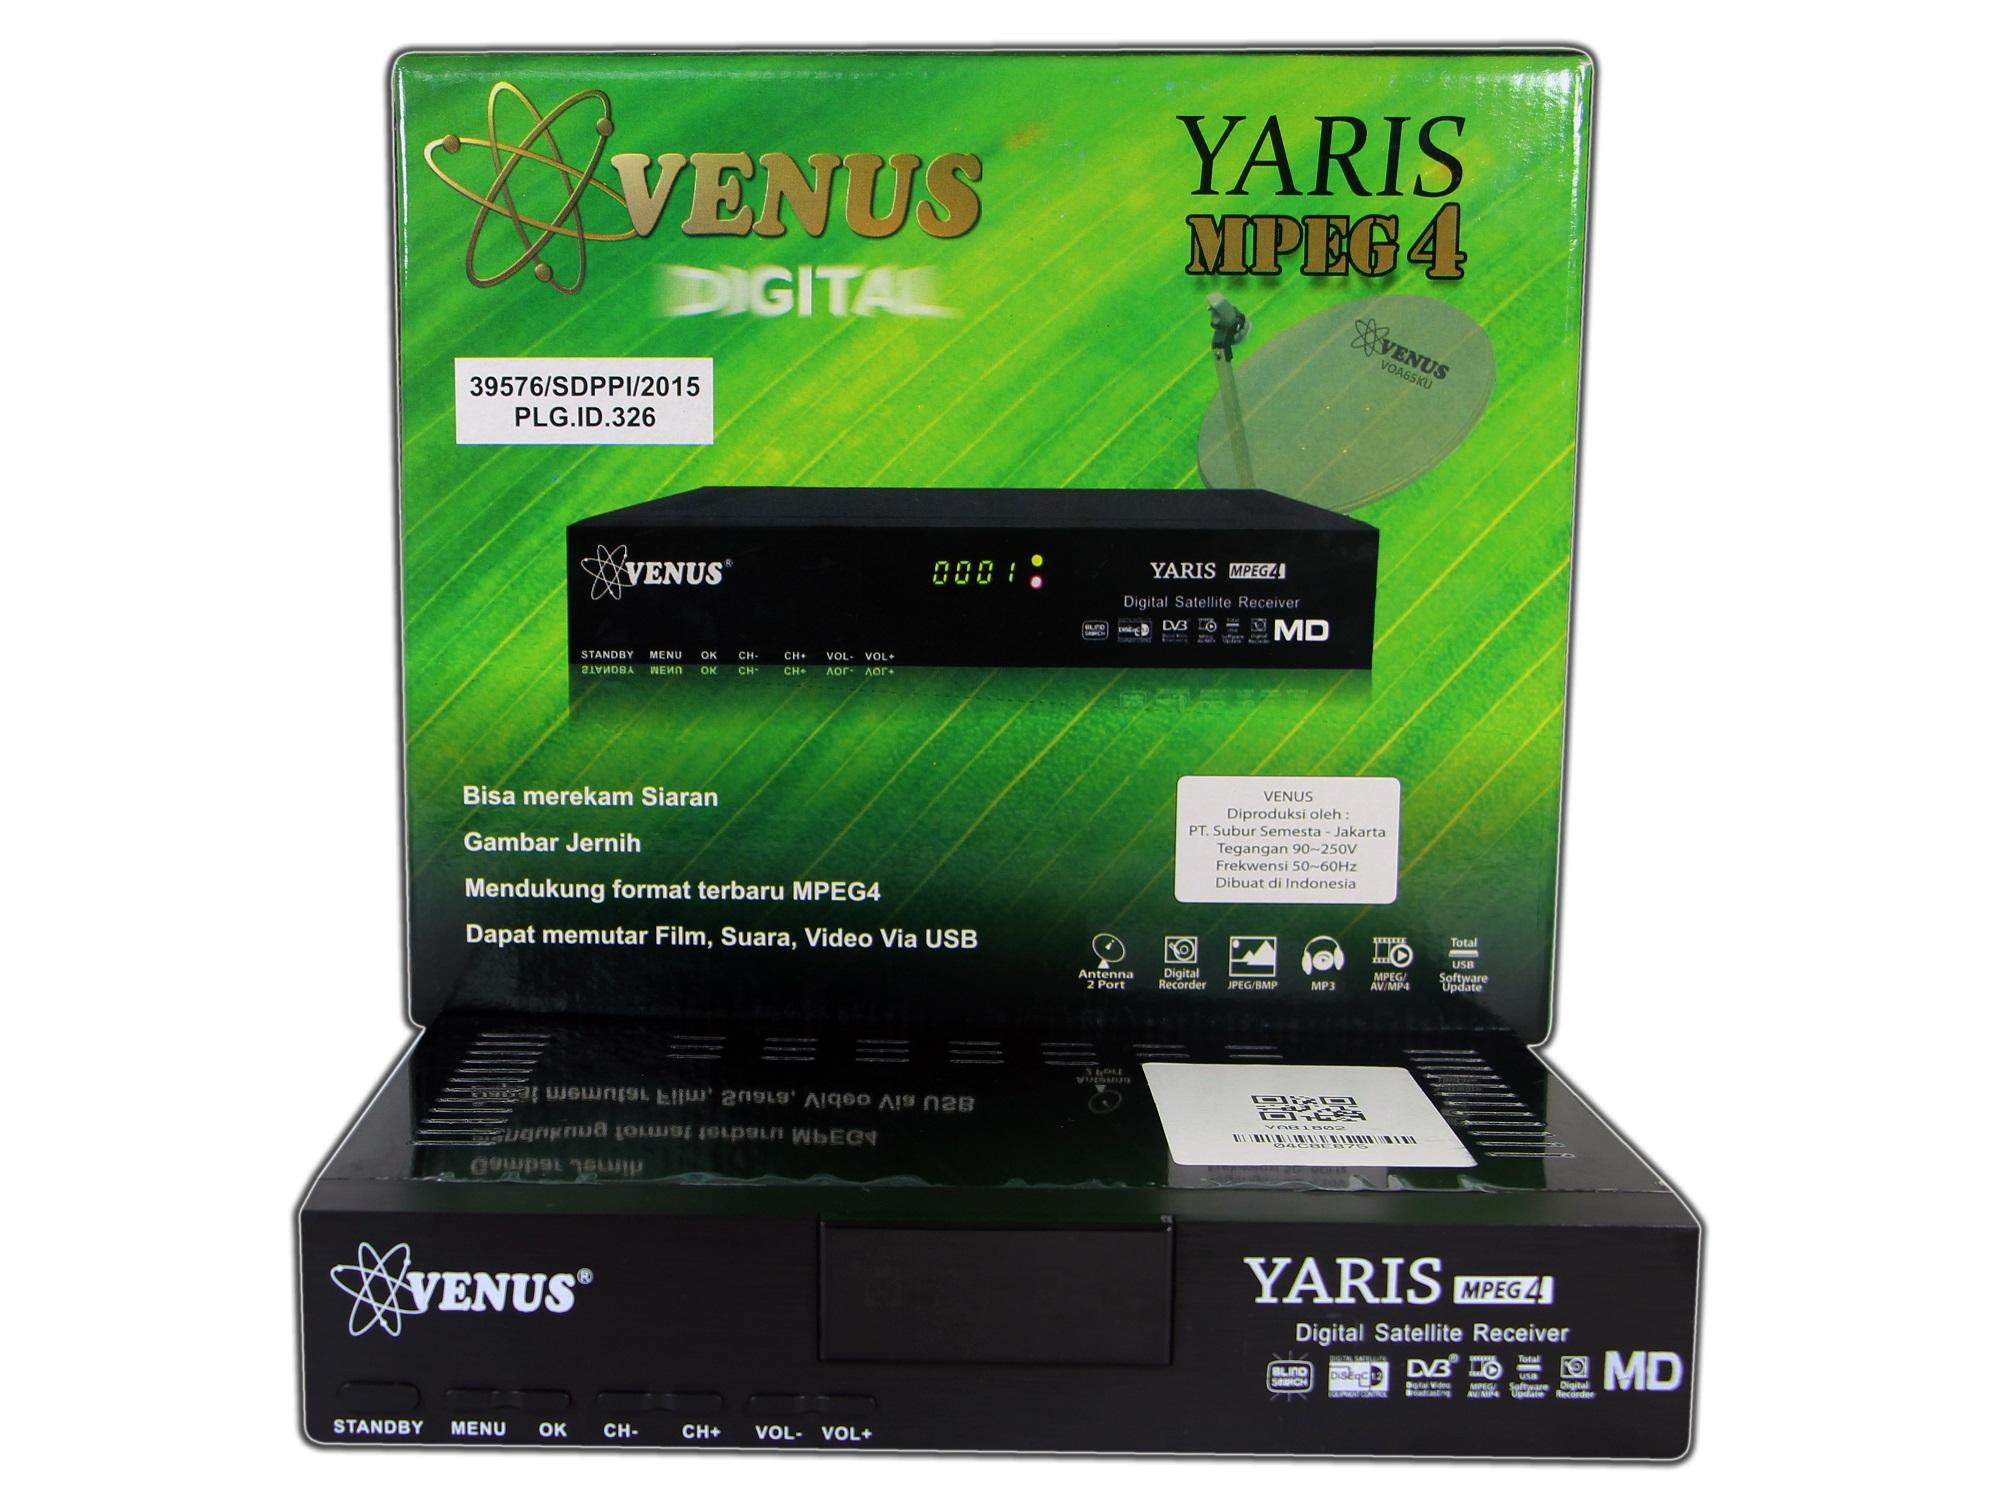 RECEIVER VENUS YARIS MPEG 4